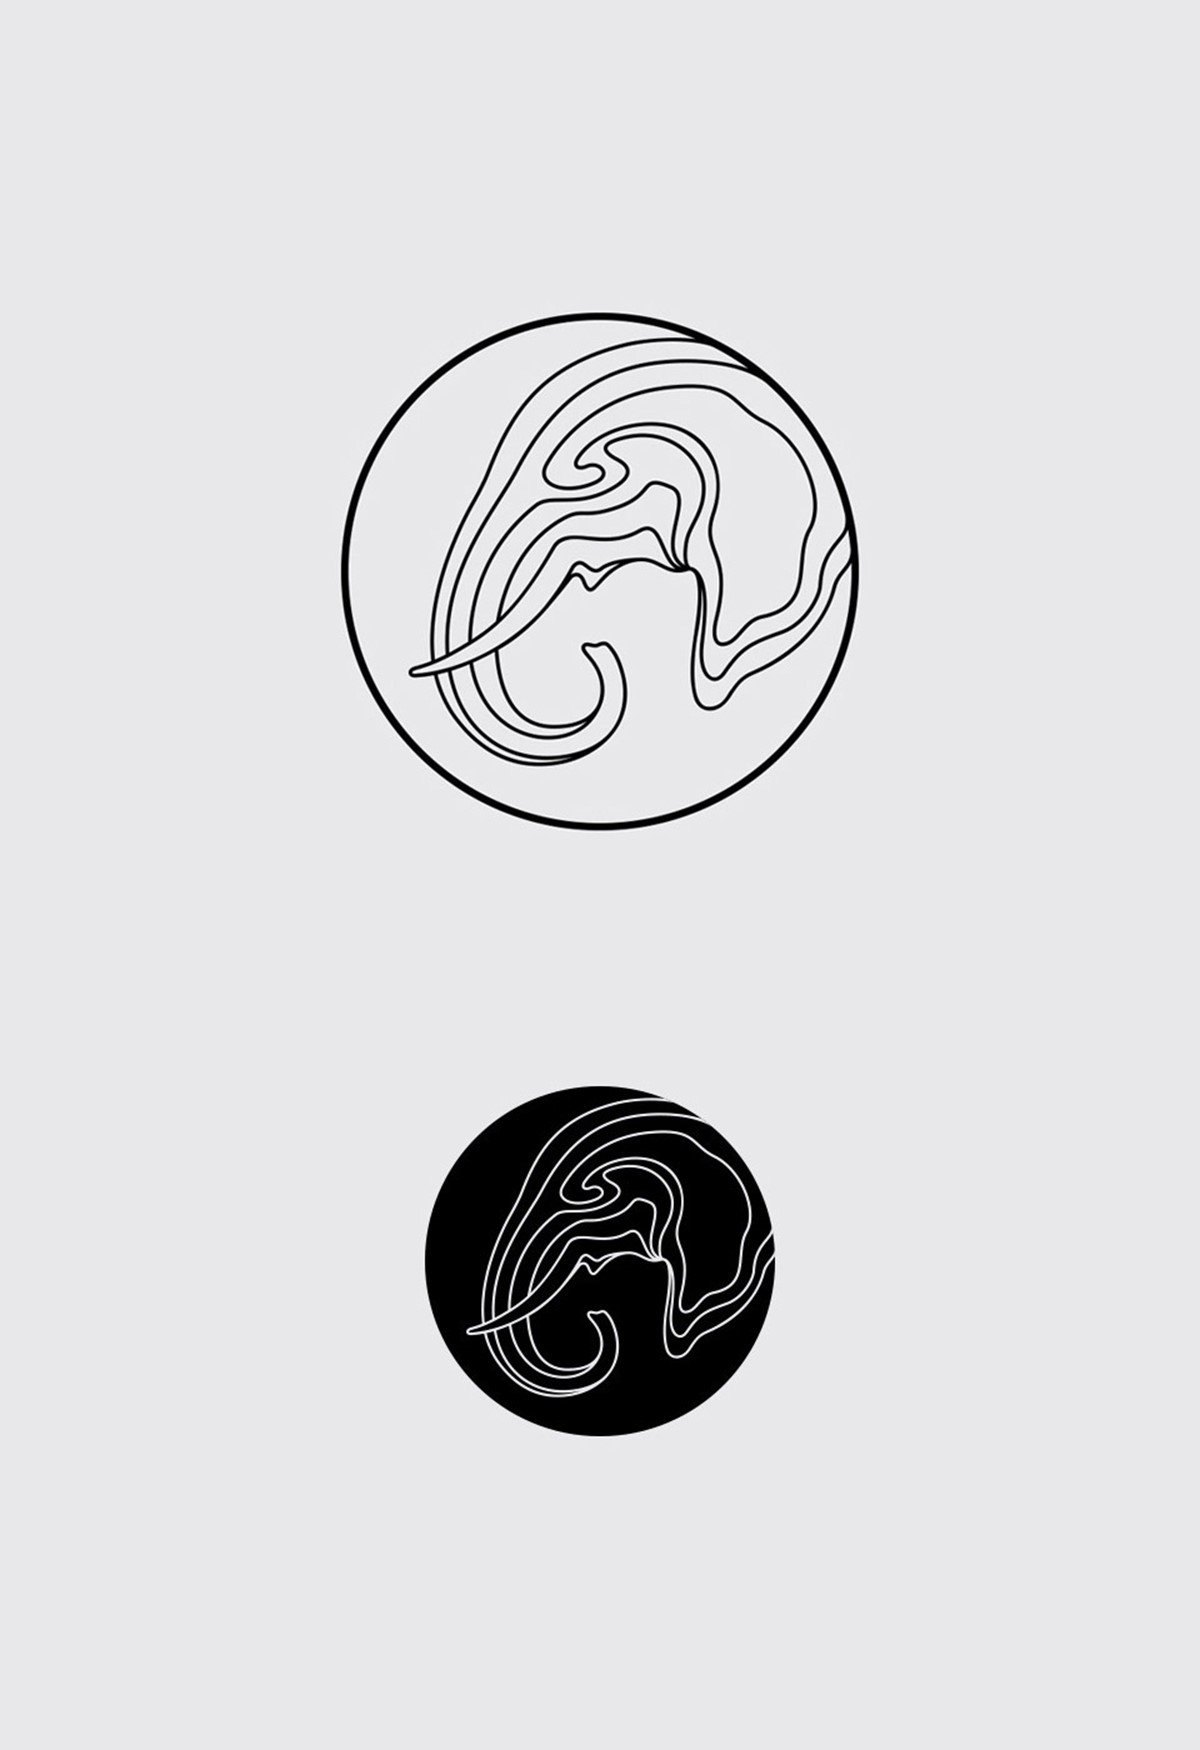 DiCaprio Foundation. Elephant Crisis Fund. Logo variations. Brand identity design by Superfried.